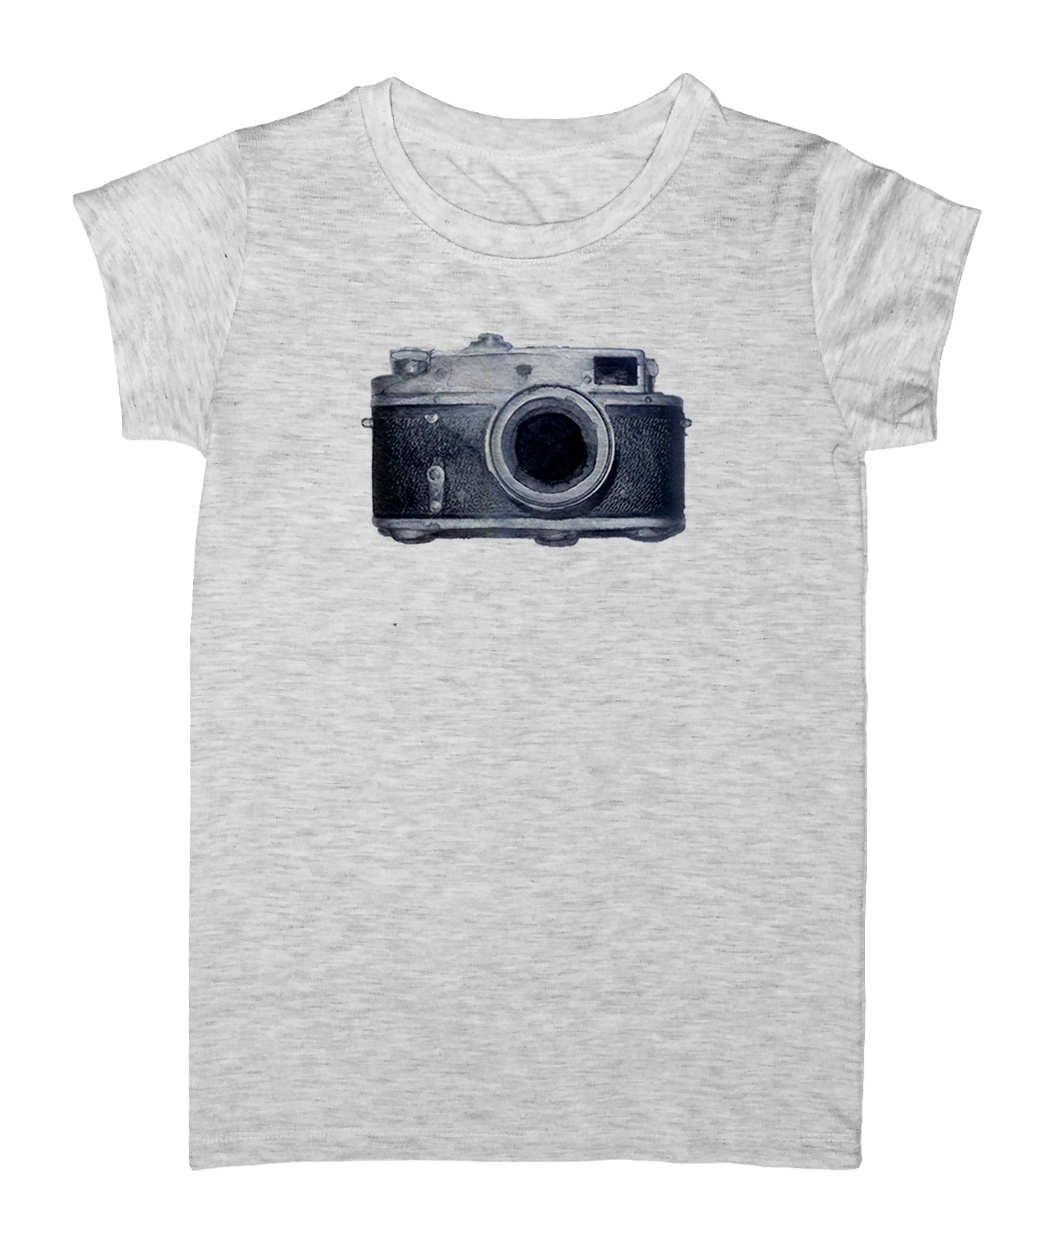 تی شرت نه طرح دوربین عکاسی مدل EZM56